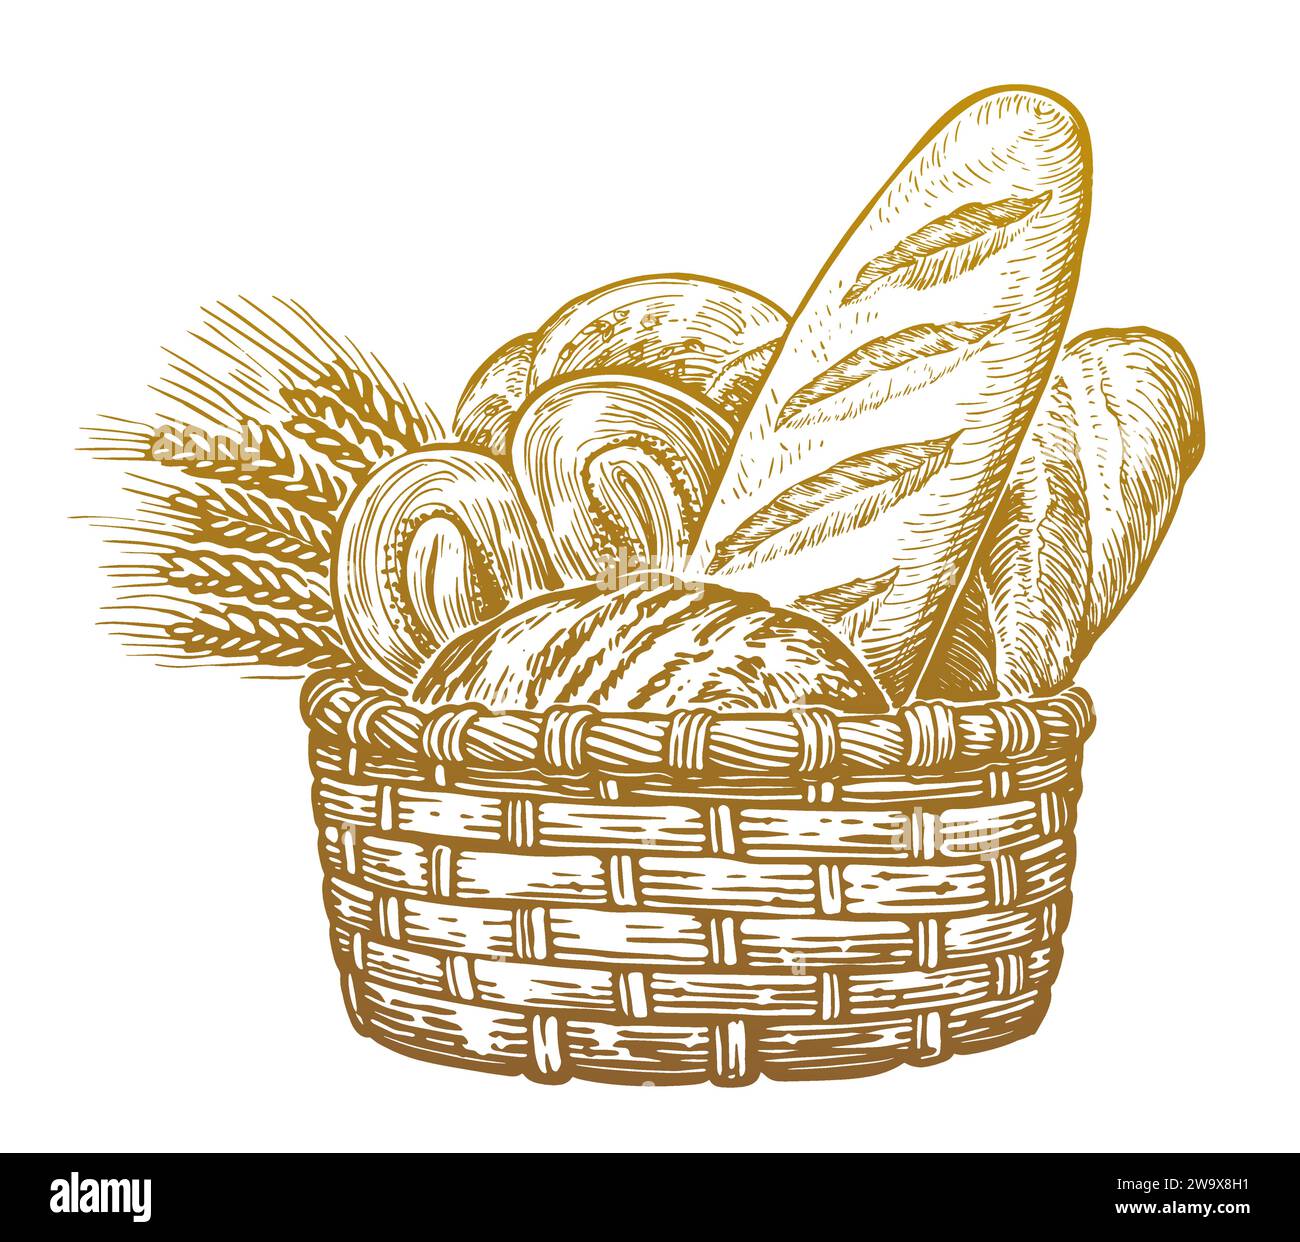 Frische Backwaren, Skizze Vintage Vektor Illustration. Brot und Weizenohren im Korb Stock Vektor